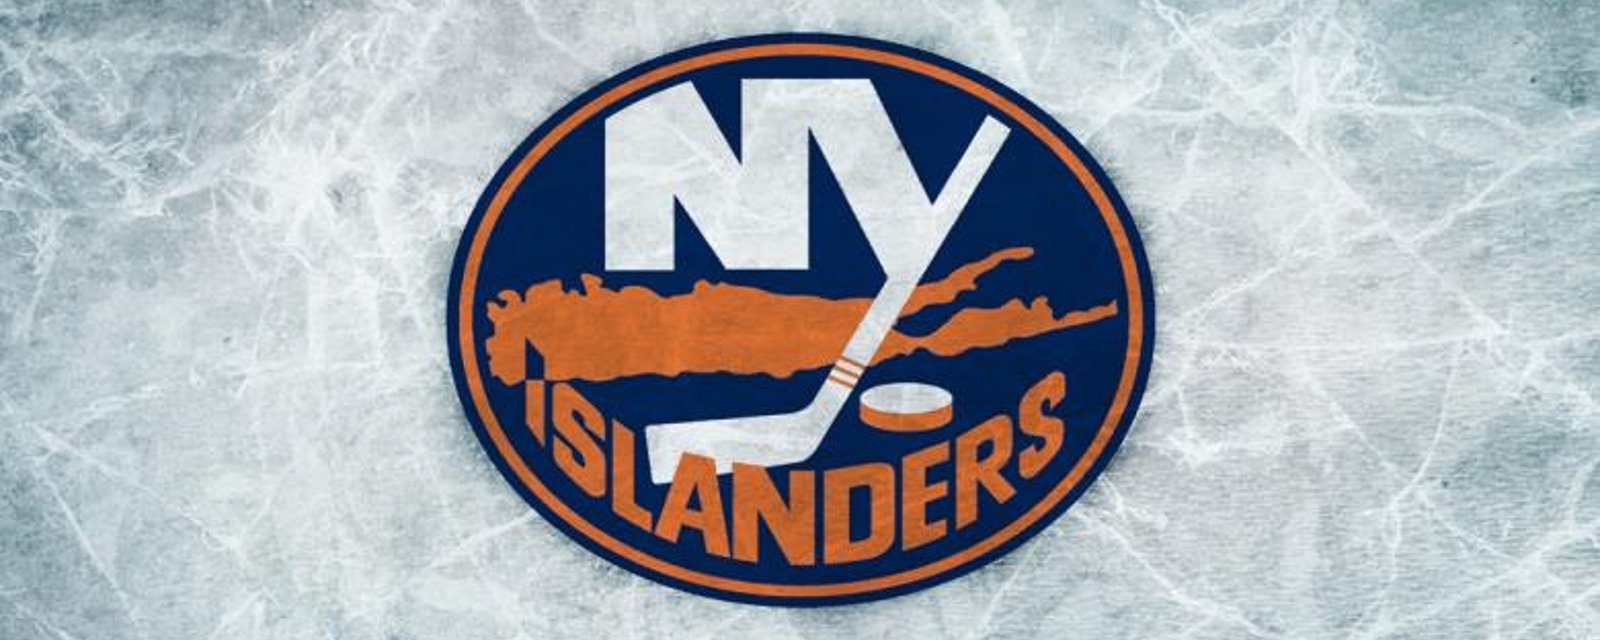 It's Islanders day at Hockey Feed!